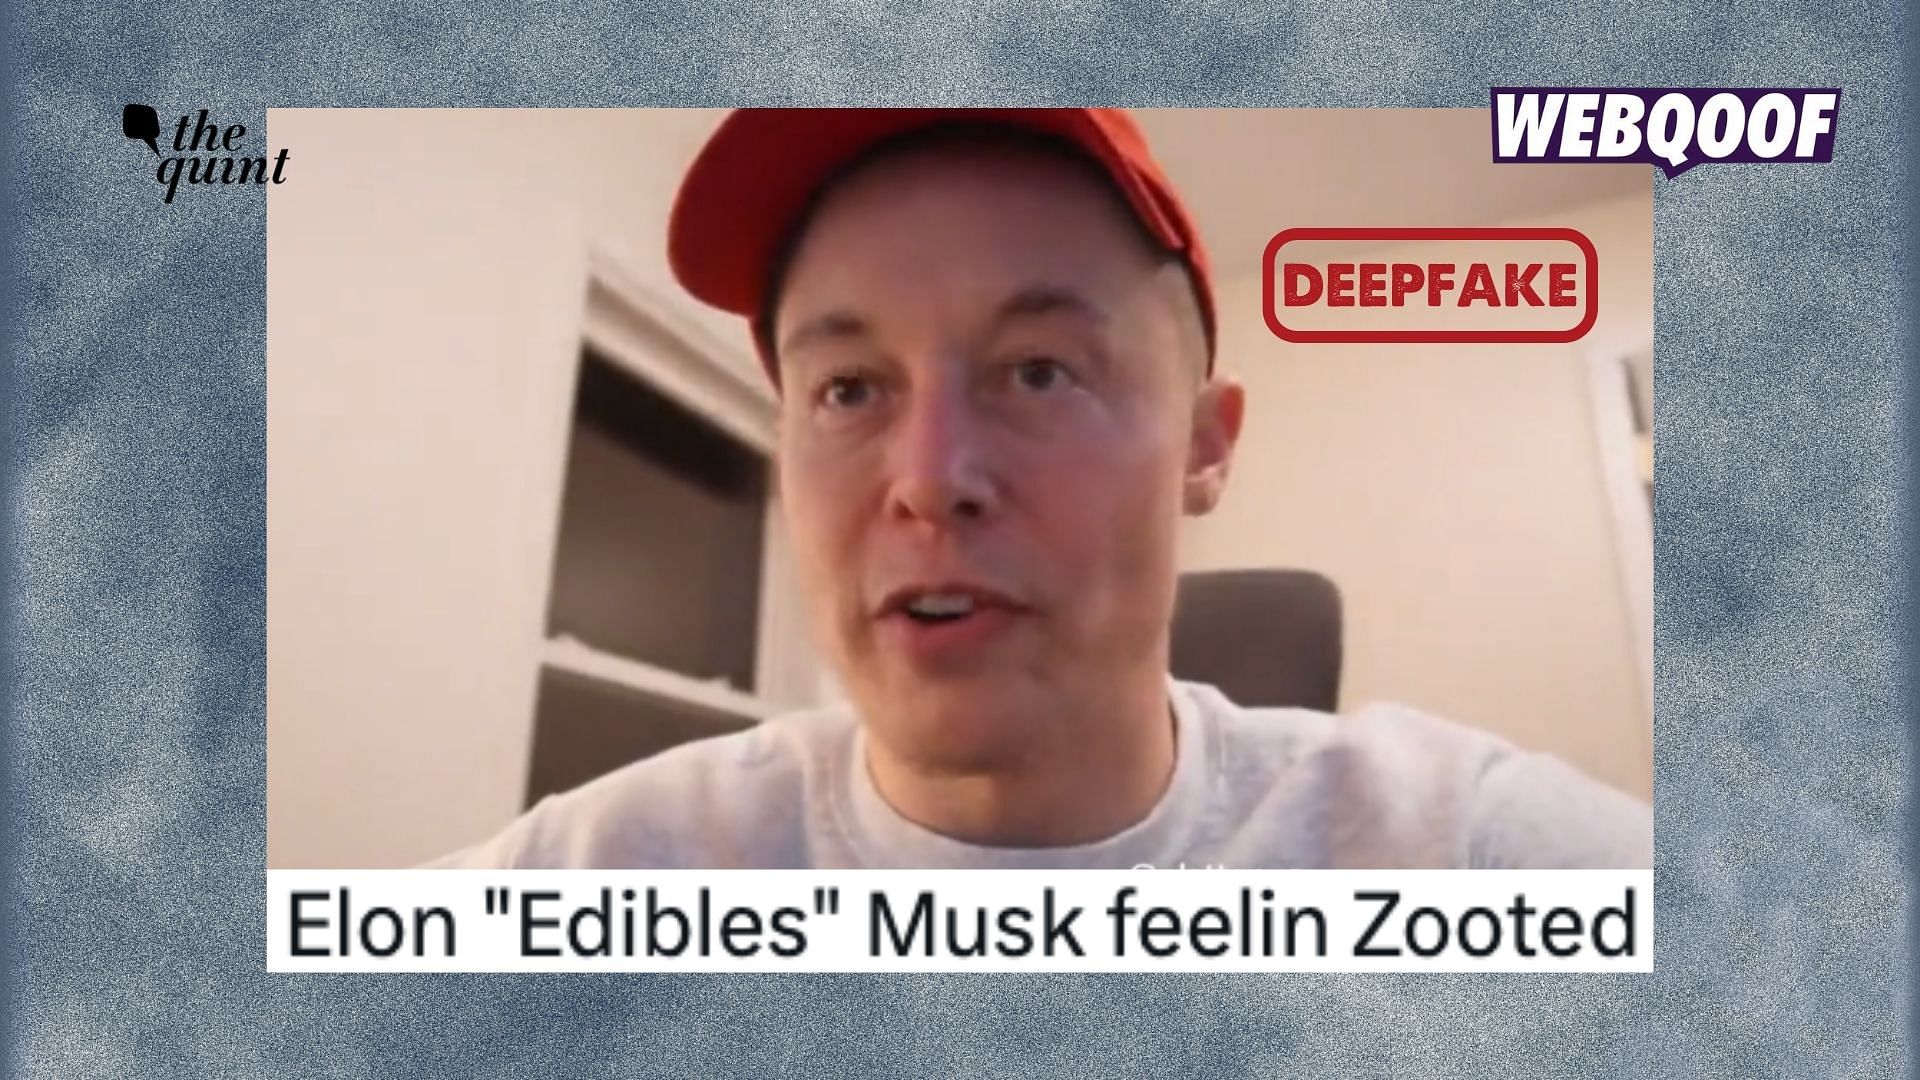 <div class="paragraphs"><p>The video is a deepfake of Elon Musk.</p></div>